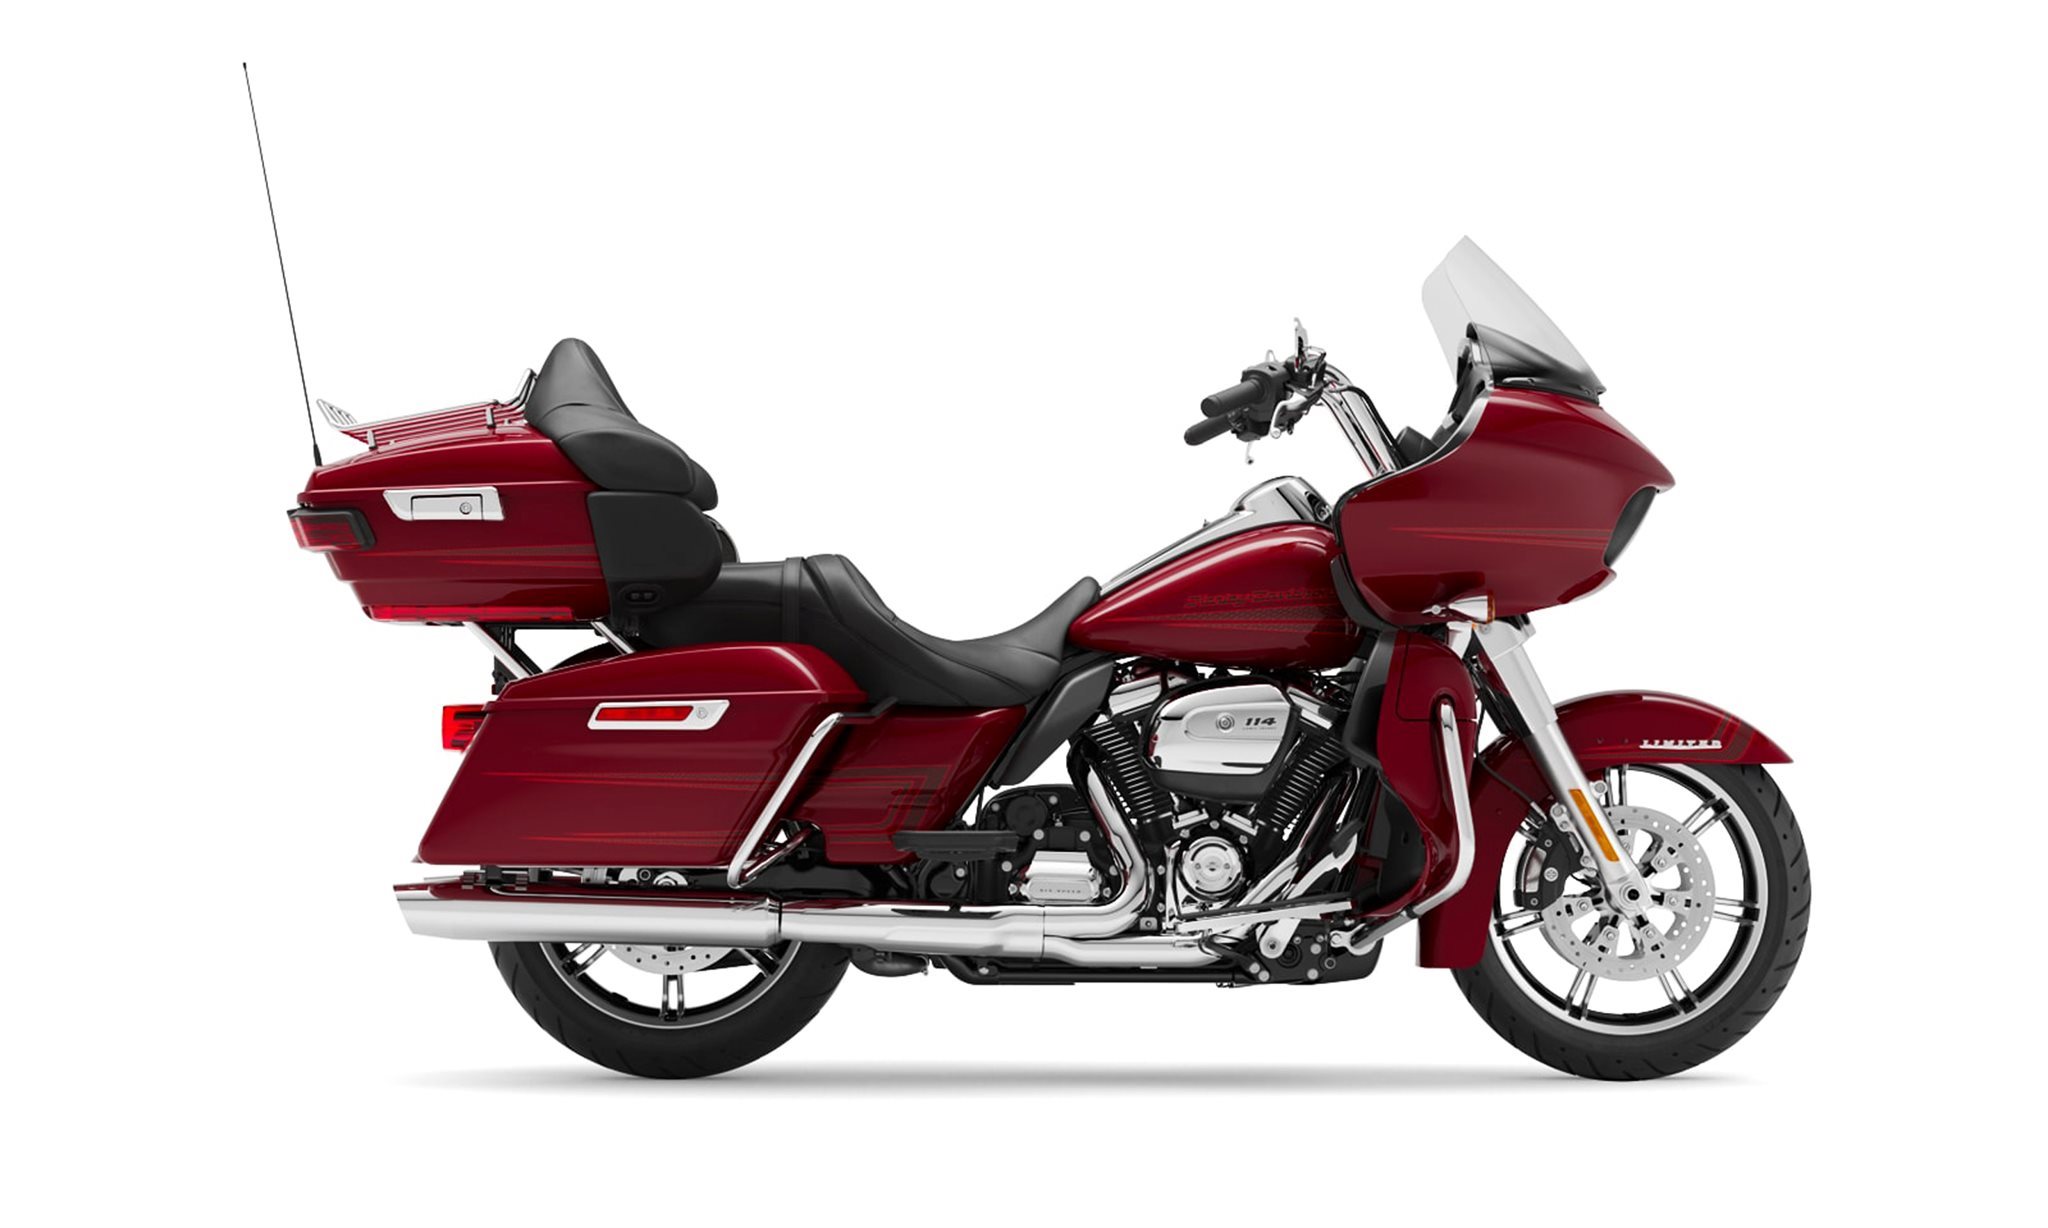 Motorrad Vergleich Harley Davidson Touring Road Glide Limited Fltrk 2021 Vs Indian Roadmaster 2021